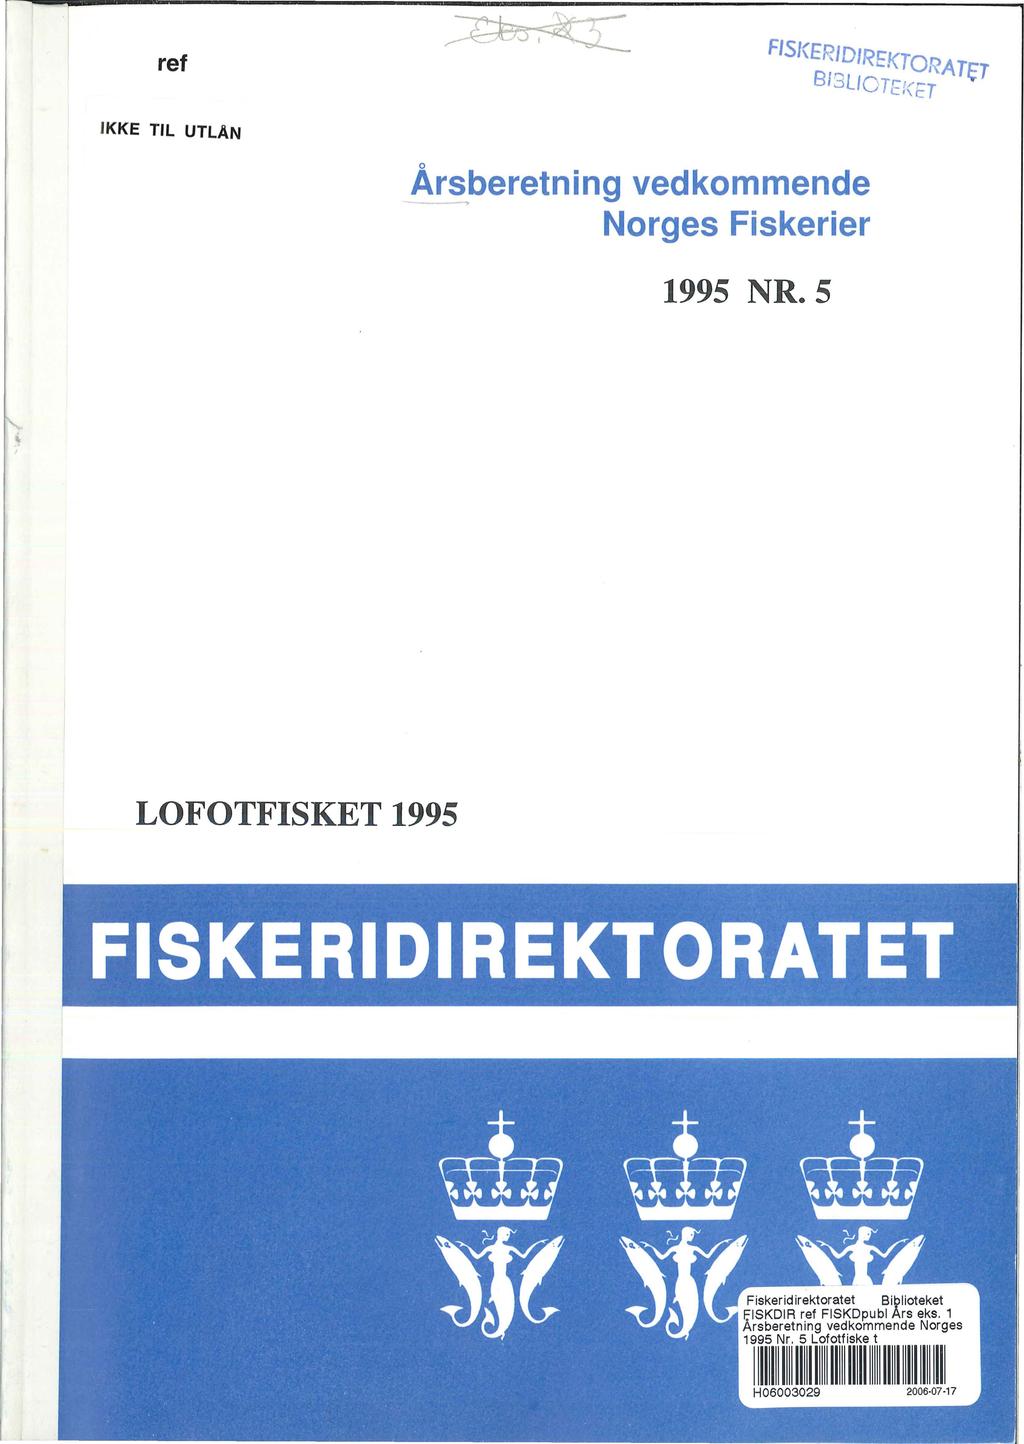 ref FISKERIDIREKTQn... I\:ATtT BIC5LIO Tr-,"r-T Cl\ C IKKE TIL UTLAN År_!beretn ing ved kmmende Nrges Fiskerier 1995 NR.